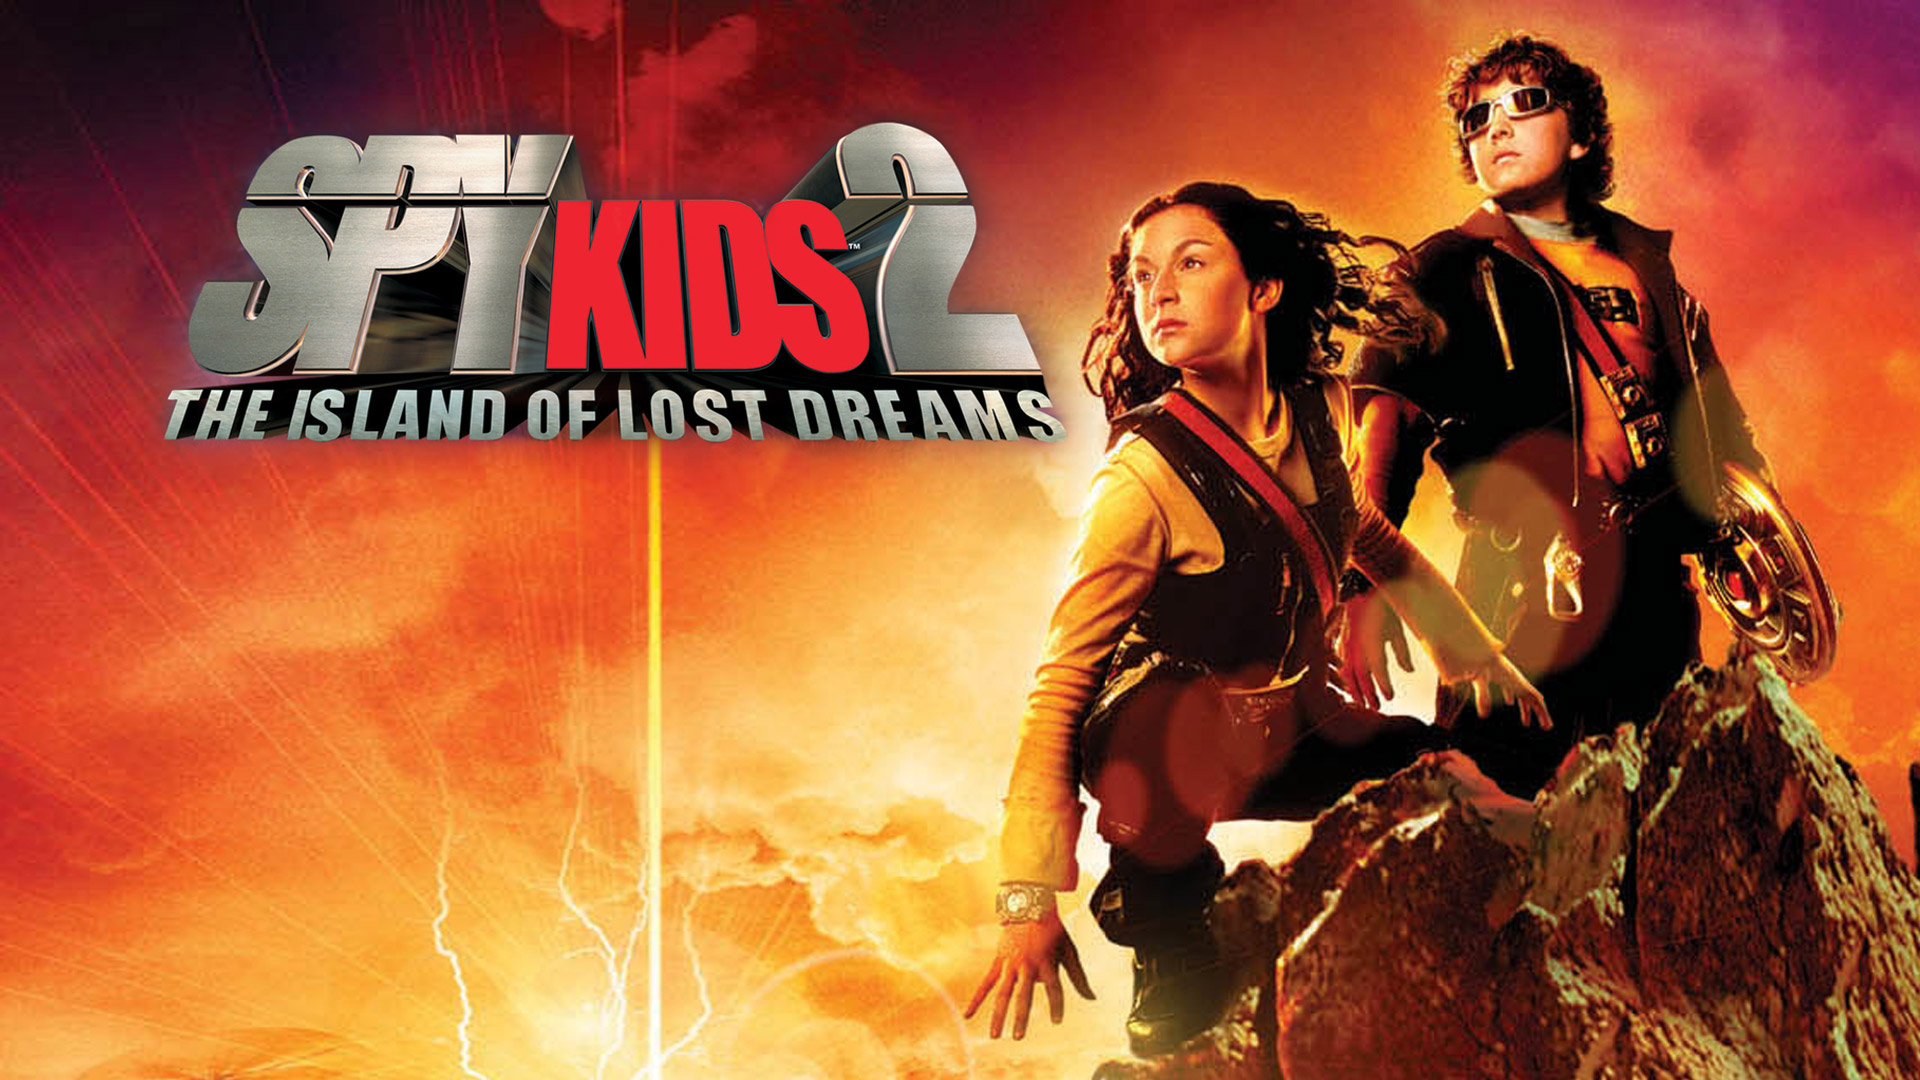 Spy Kids 2: The Island Of Lost Dreams